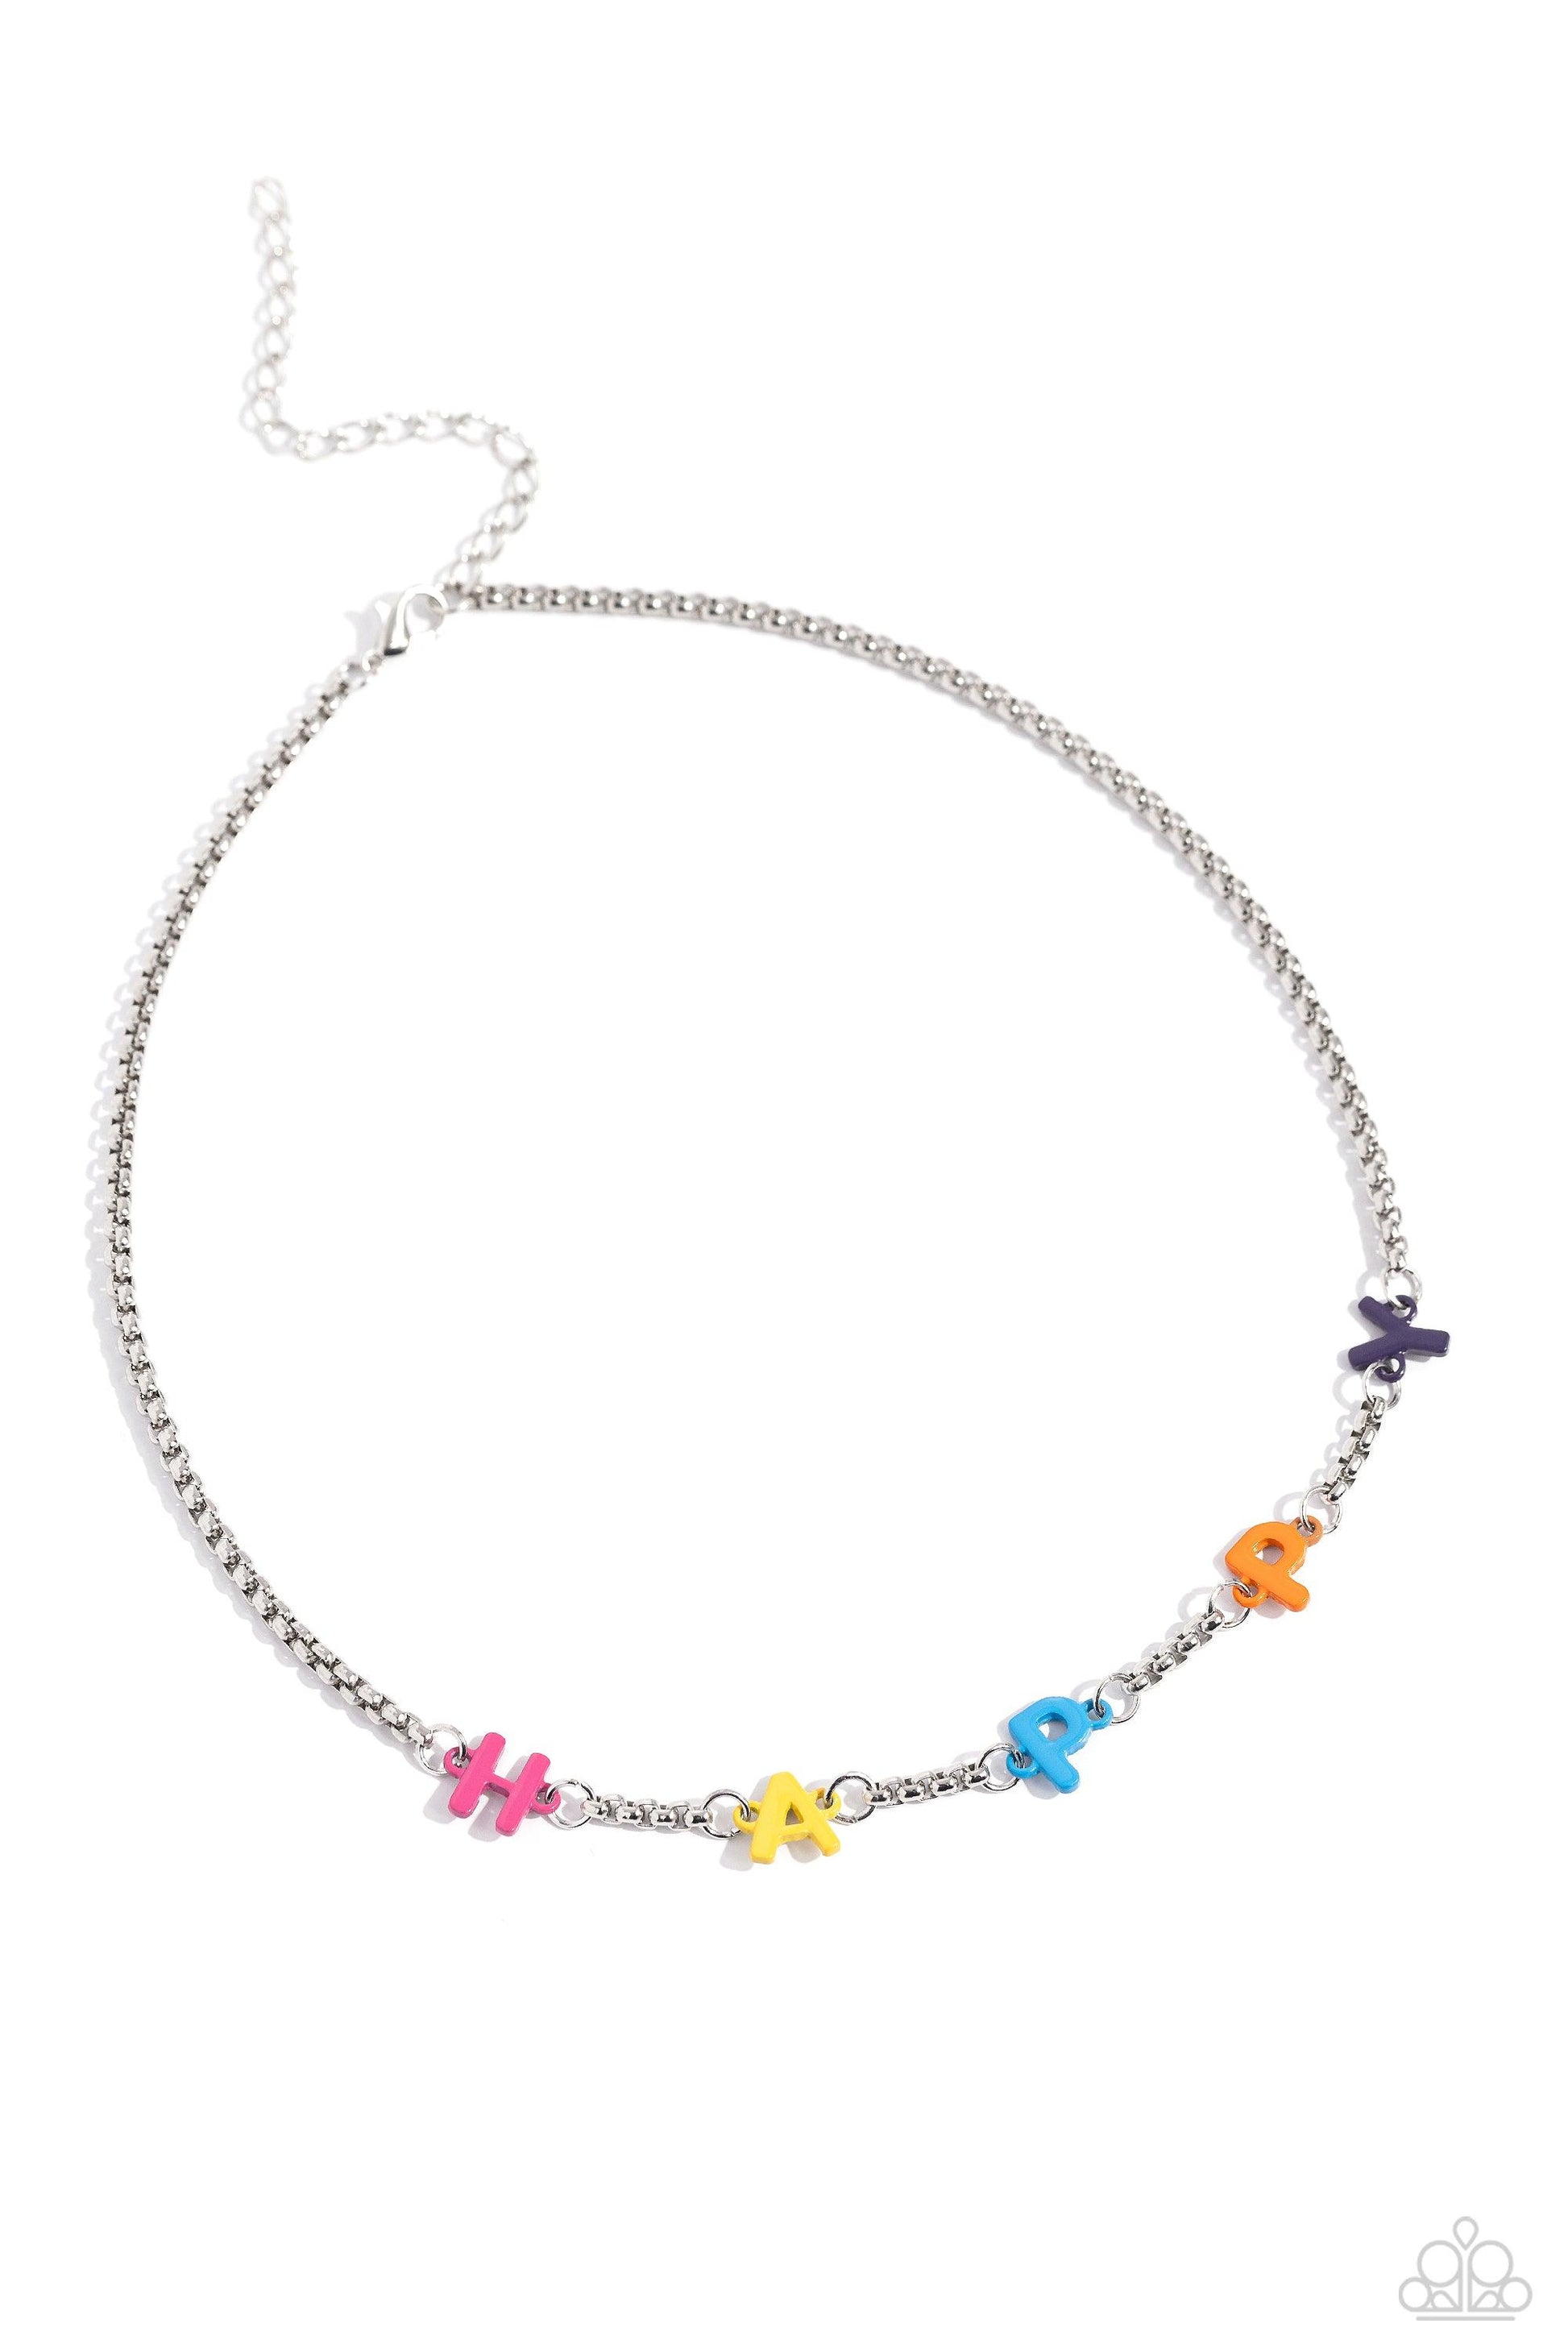 Paparazzi Accessories - Joyful Radiance - Multicolor Choker Necklace - Bling by JessieK